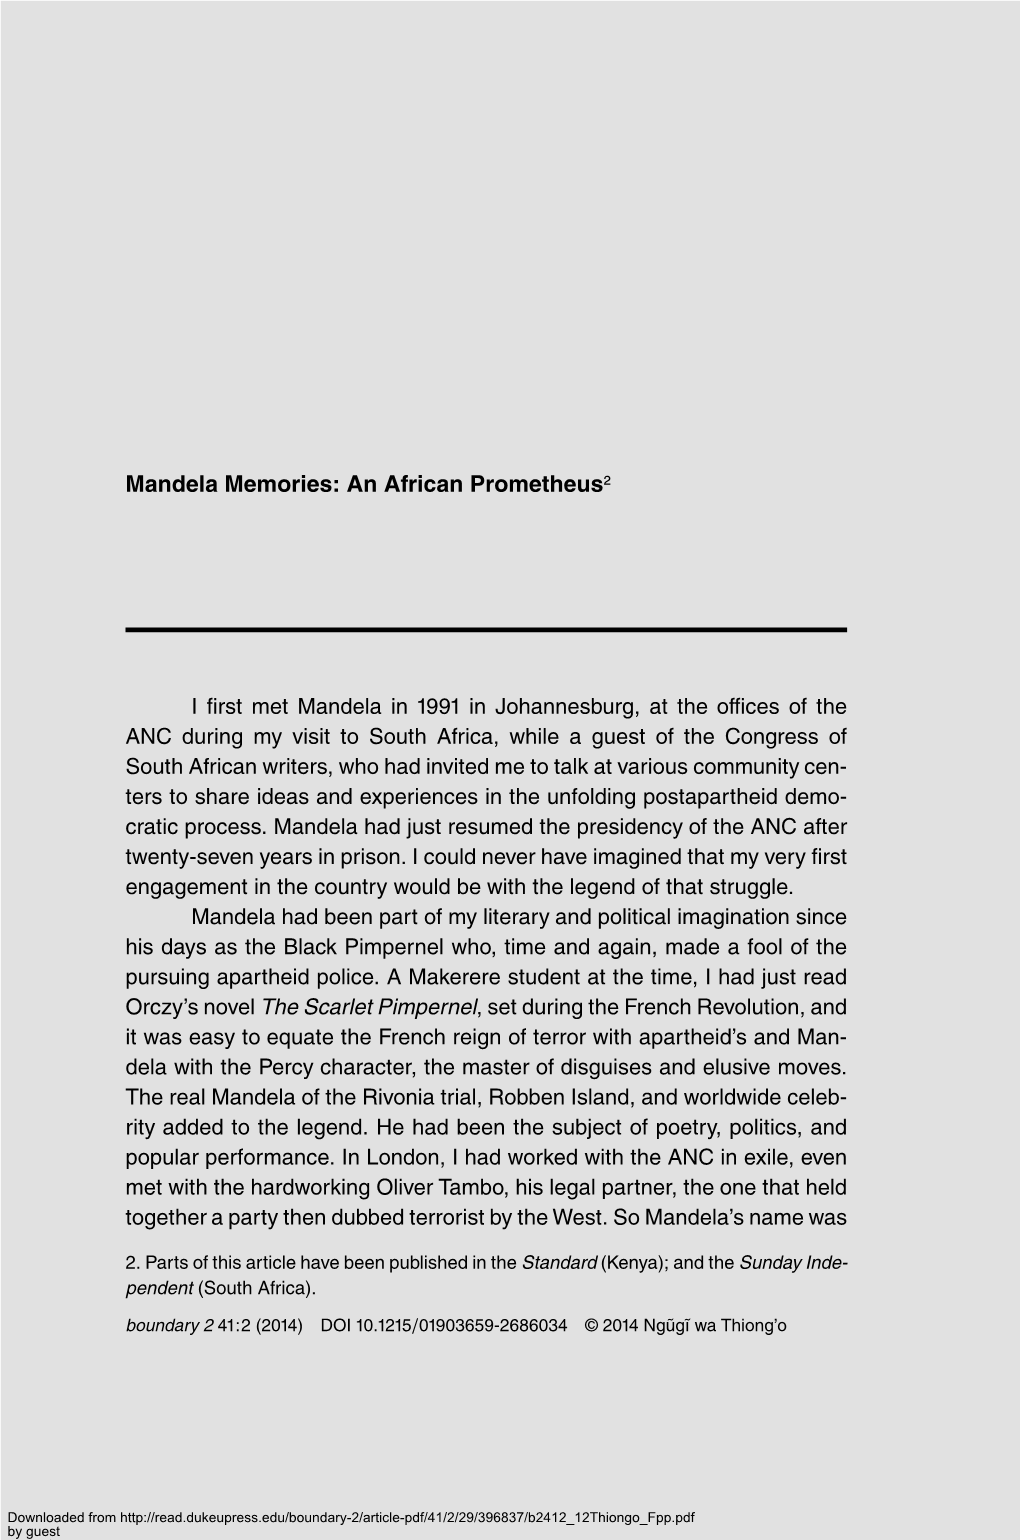 Mandela Memories: an African Prometheus2